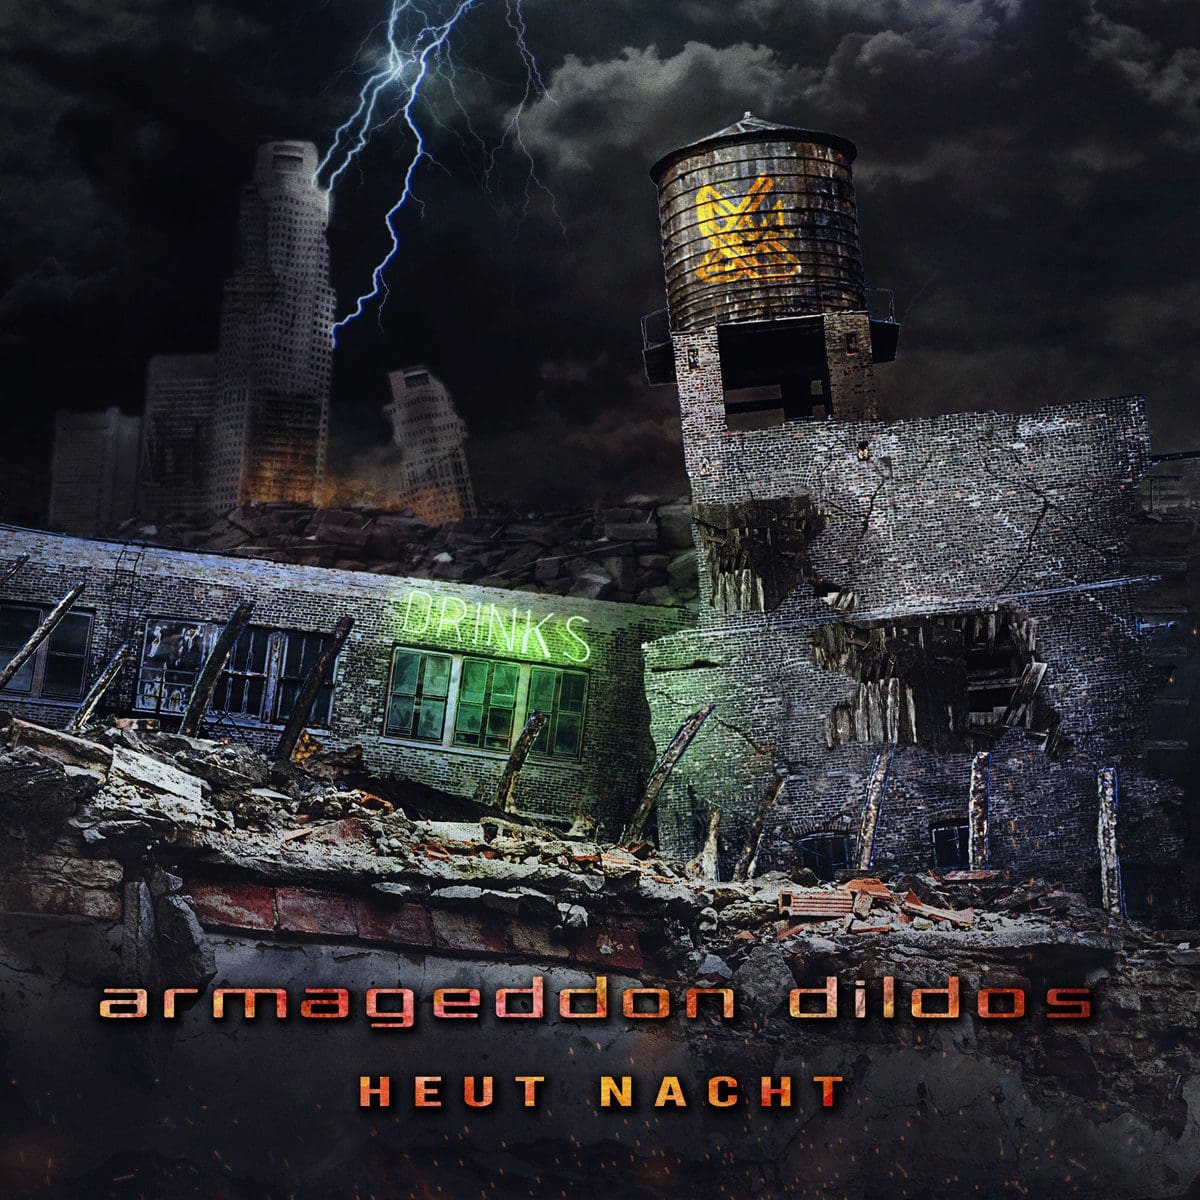 Armageddon Dildos launch 7-track download EP via Bandcamp: 'Heut Nacht'